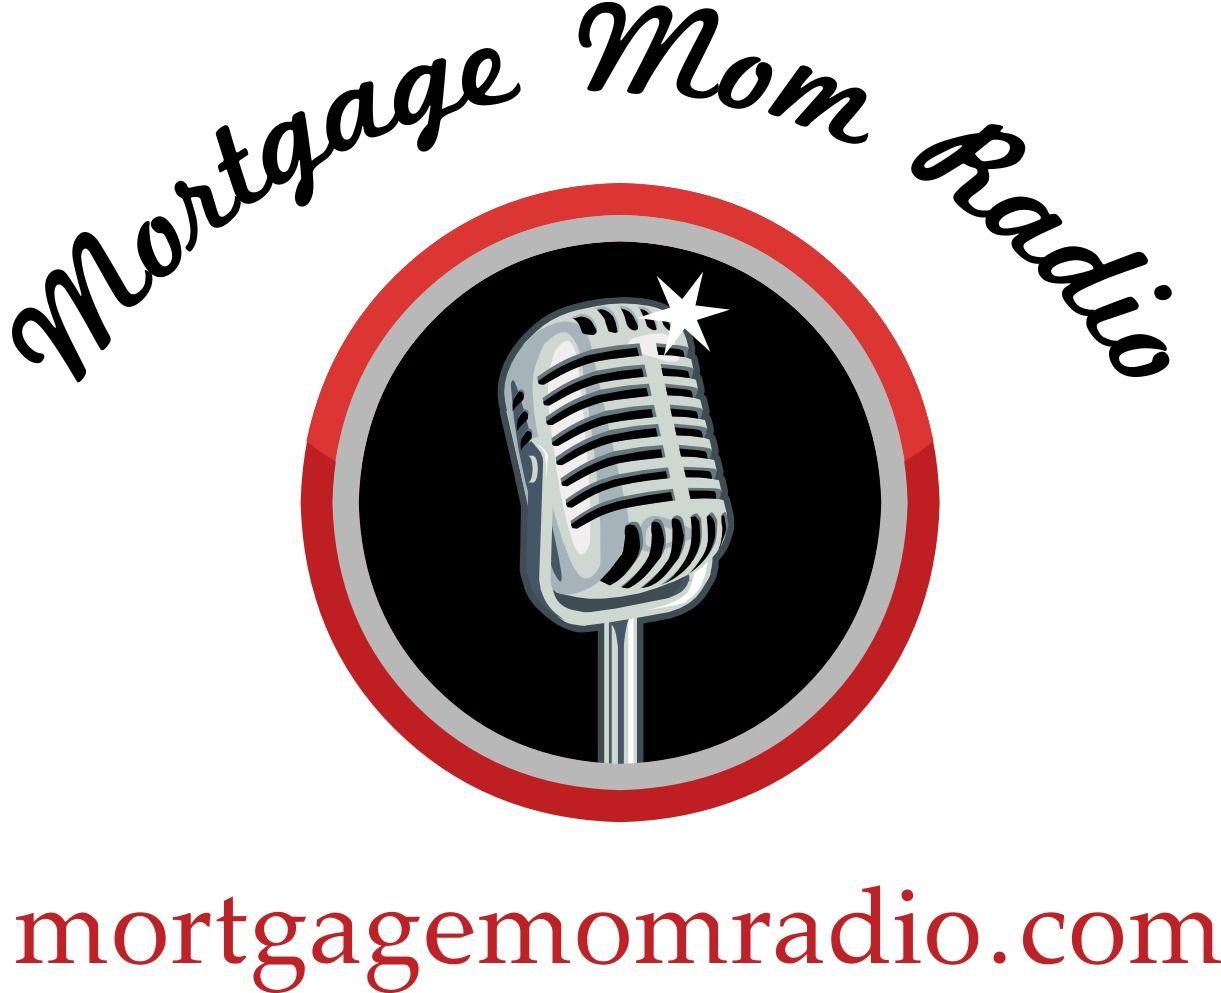 Movement Mortgage Logo - Debbie Marcoux. Home Loans & Refinance